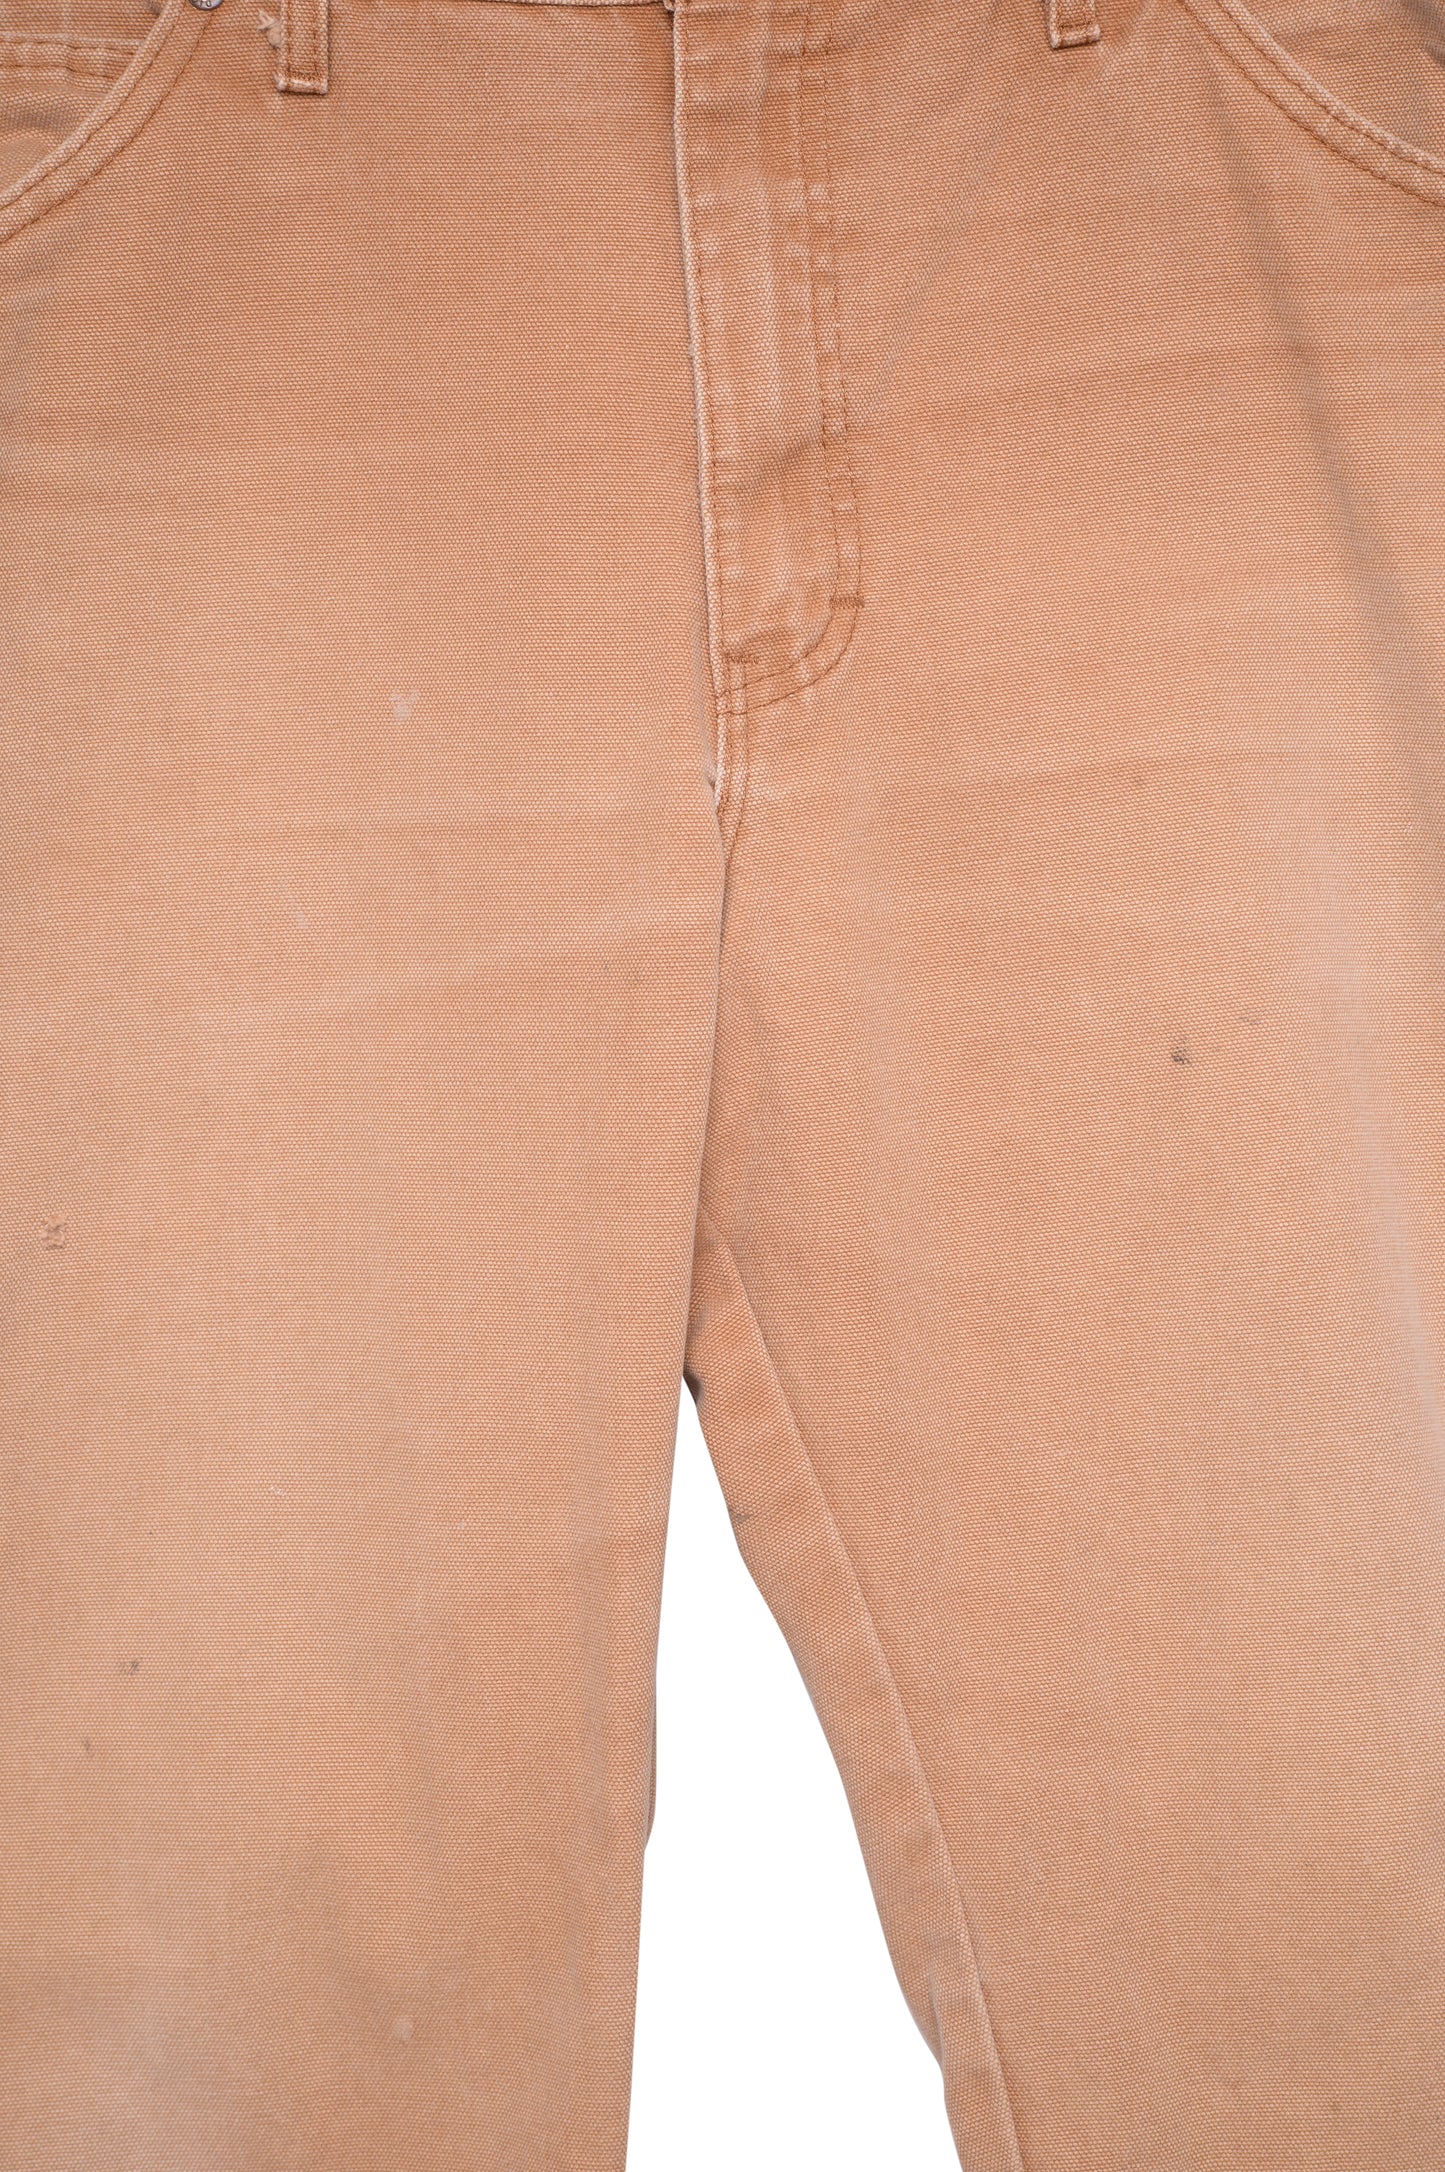 Faded Dickies Carpenter Pants 36W x 30L